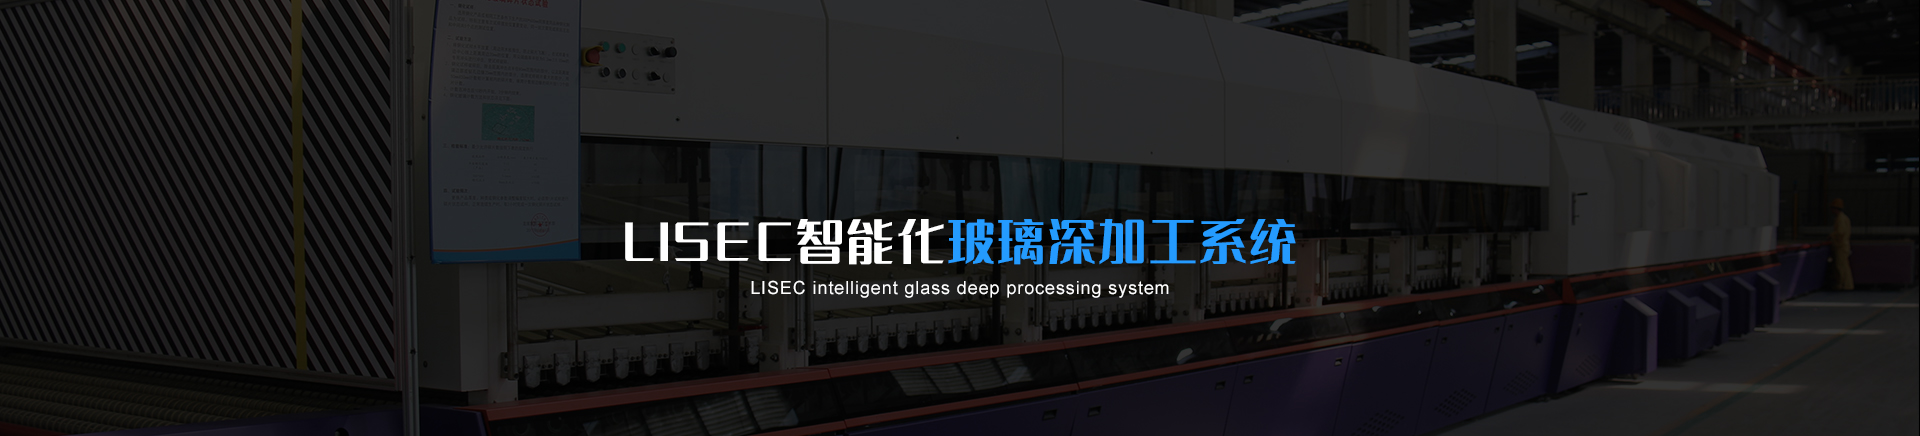 LISEC系统